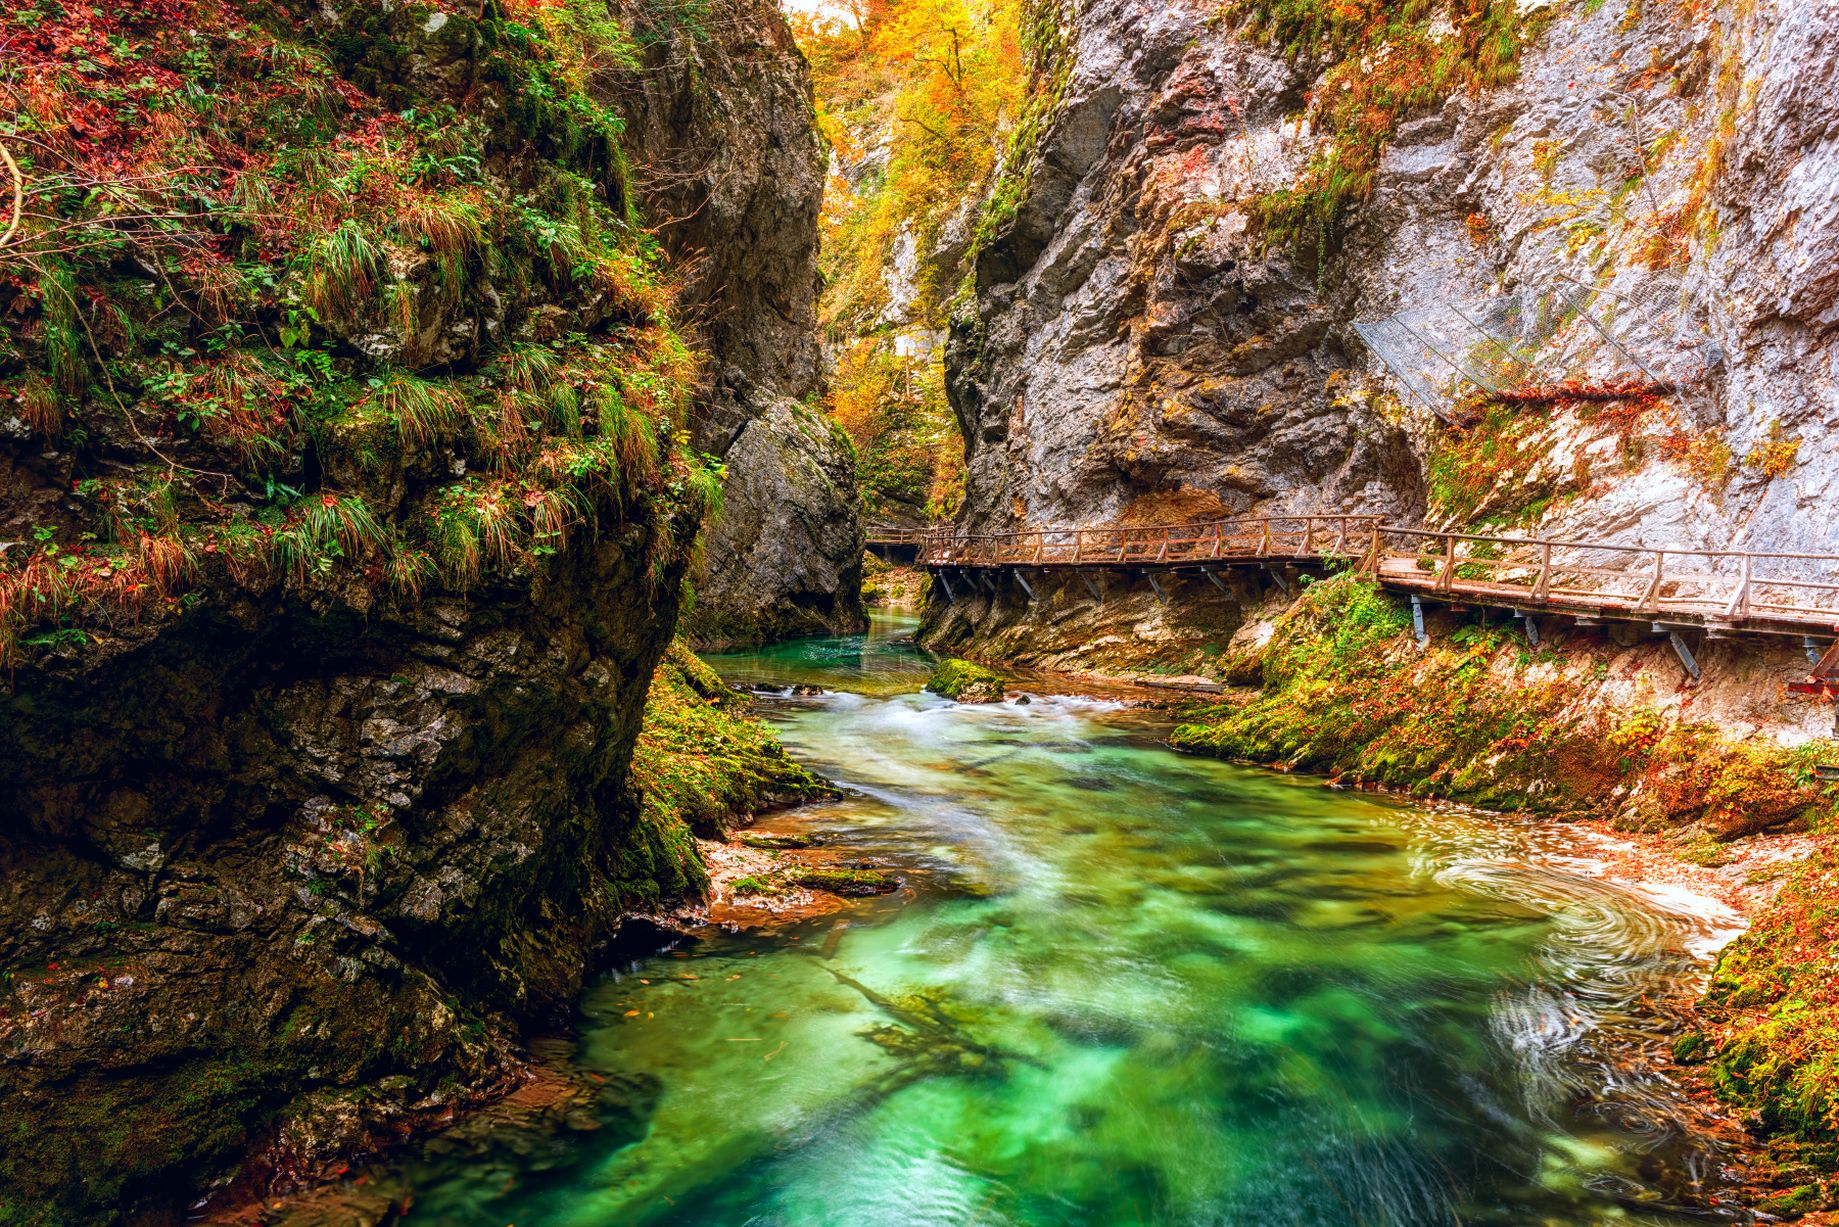 Famous Vintgar gorge in Slovenia